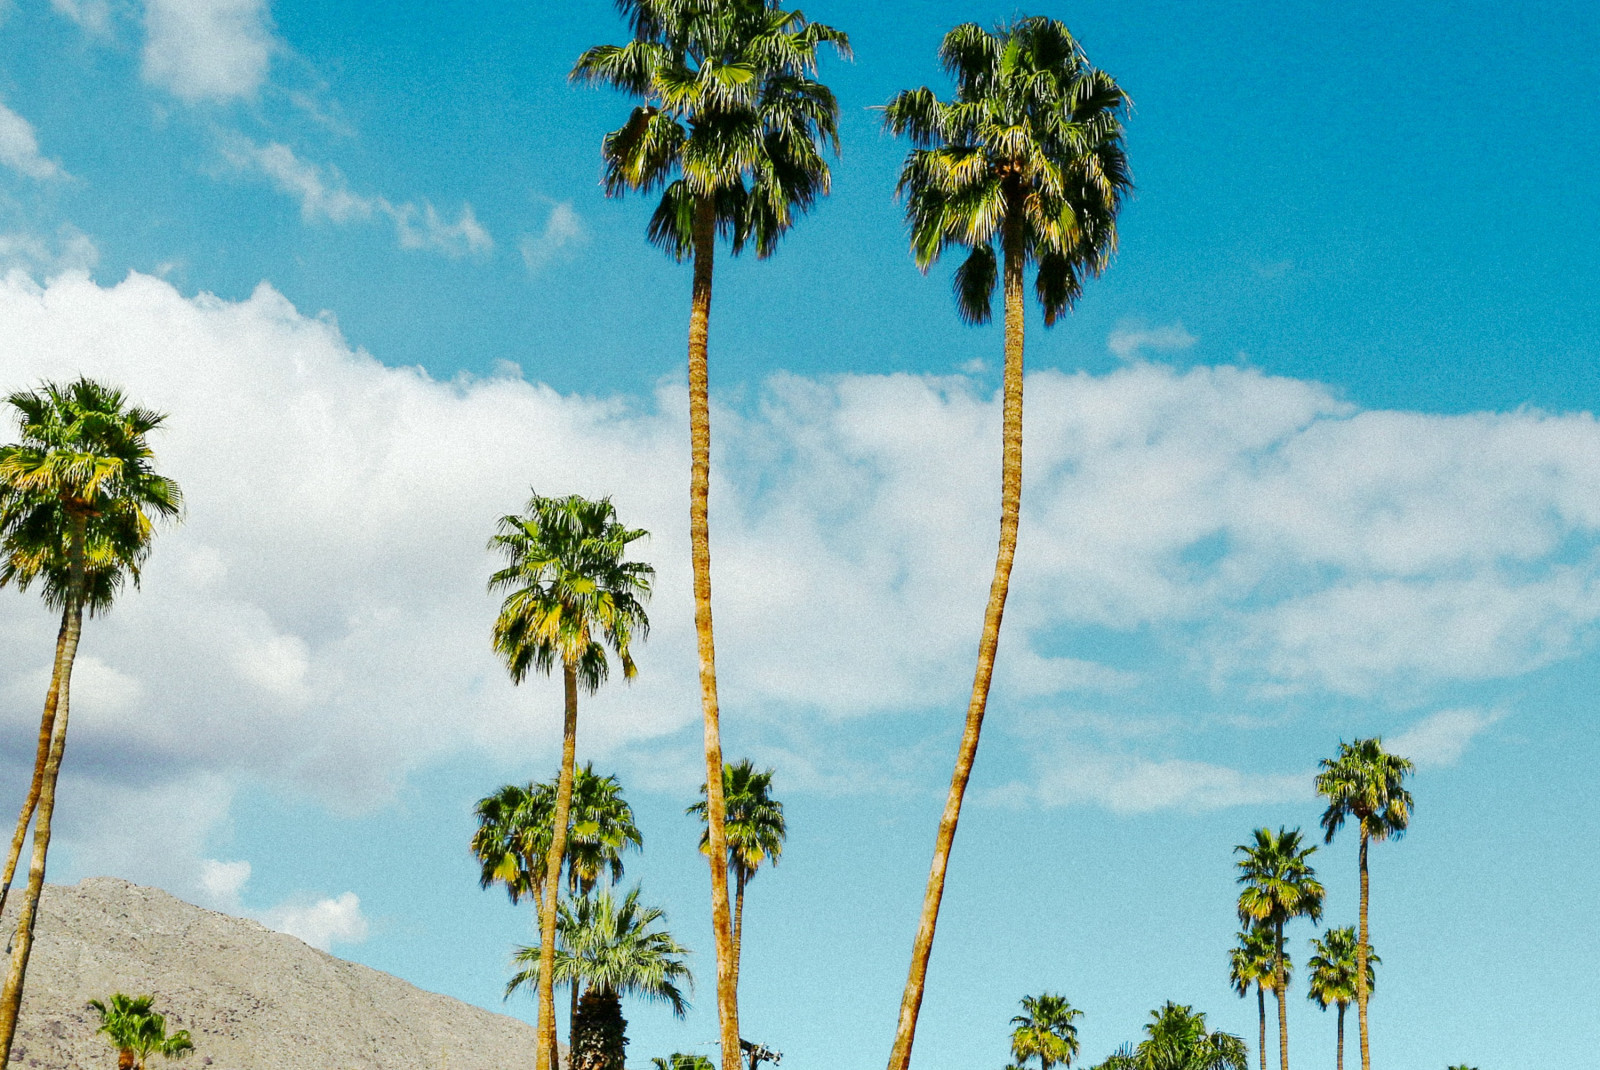 Palm trees in blue skies in Palm Springs. 